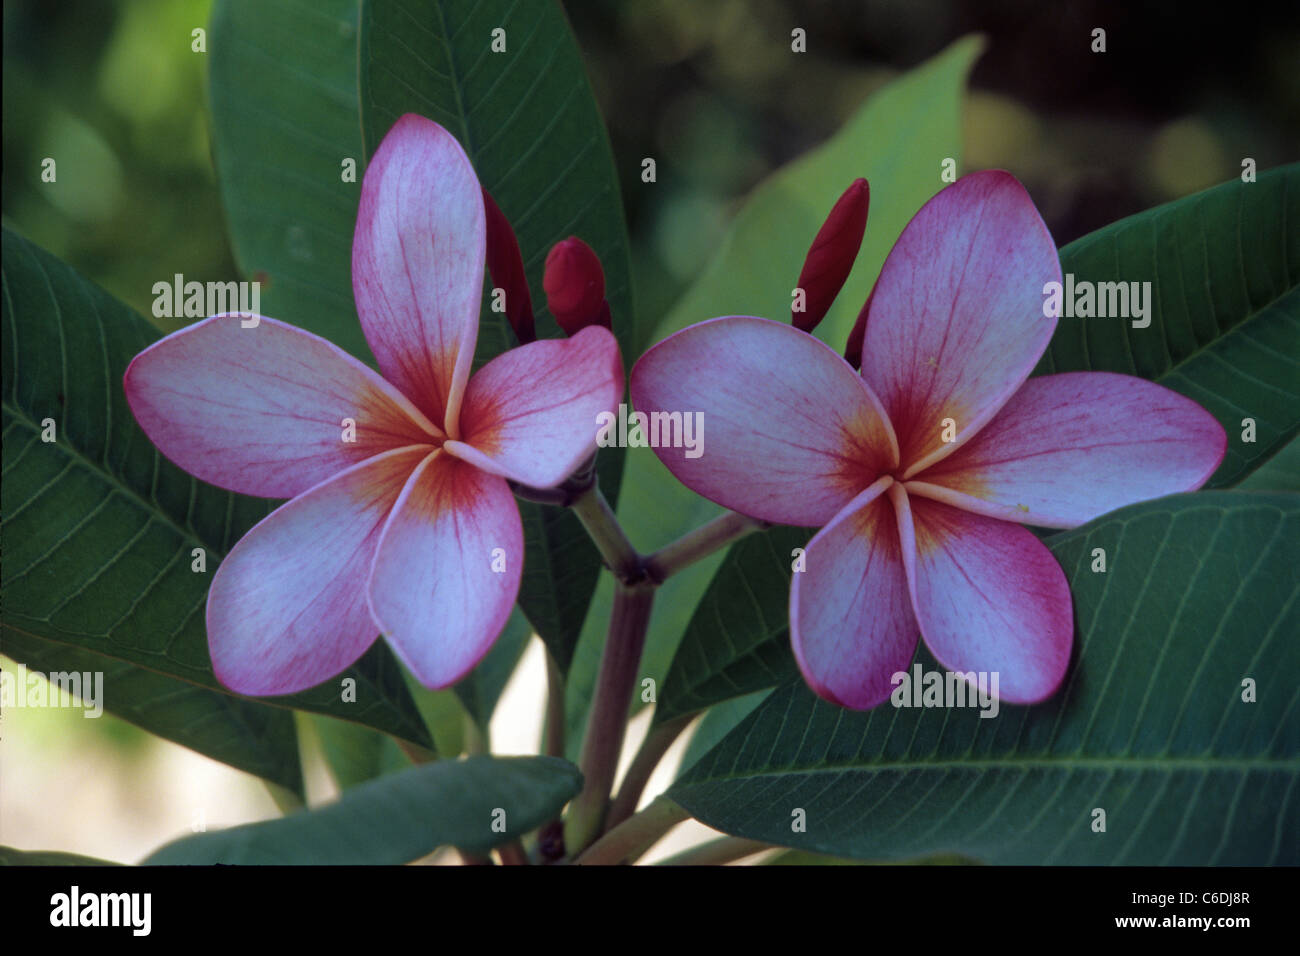 Blumenbluete, Salalah, Flower blossom, Salalah Stock Photo